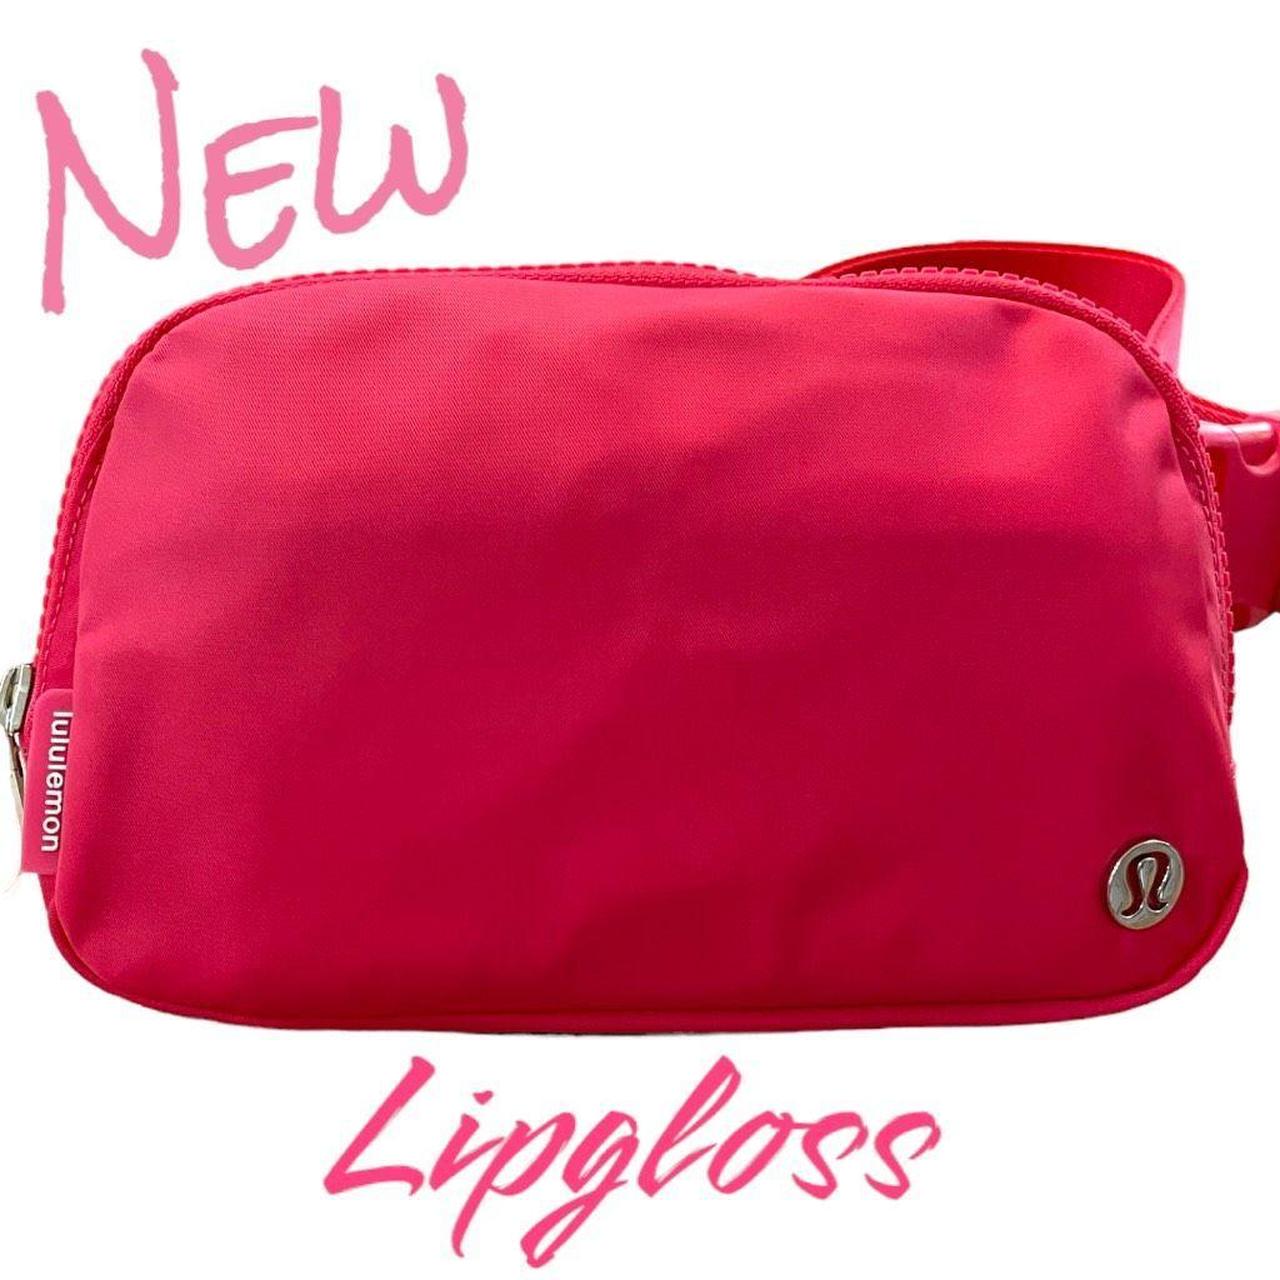 Lululemon Everywhere Belt Bag 1L in Lip Gloss - Depop